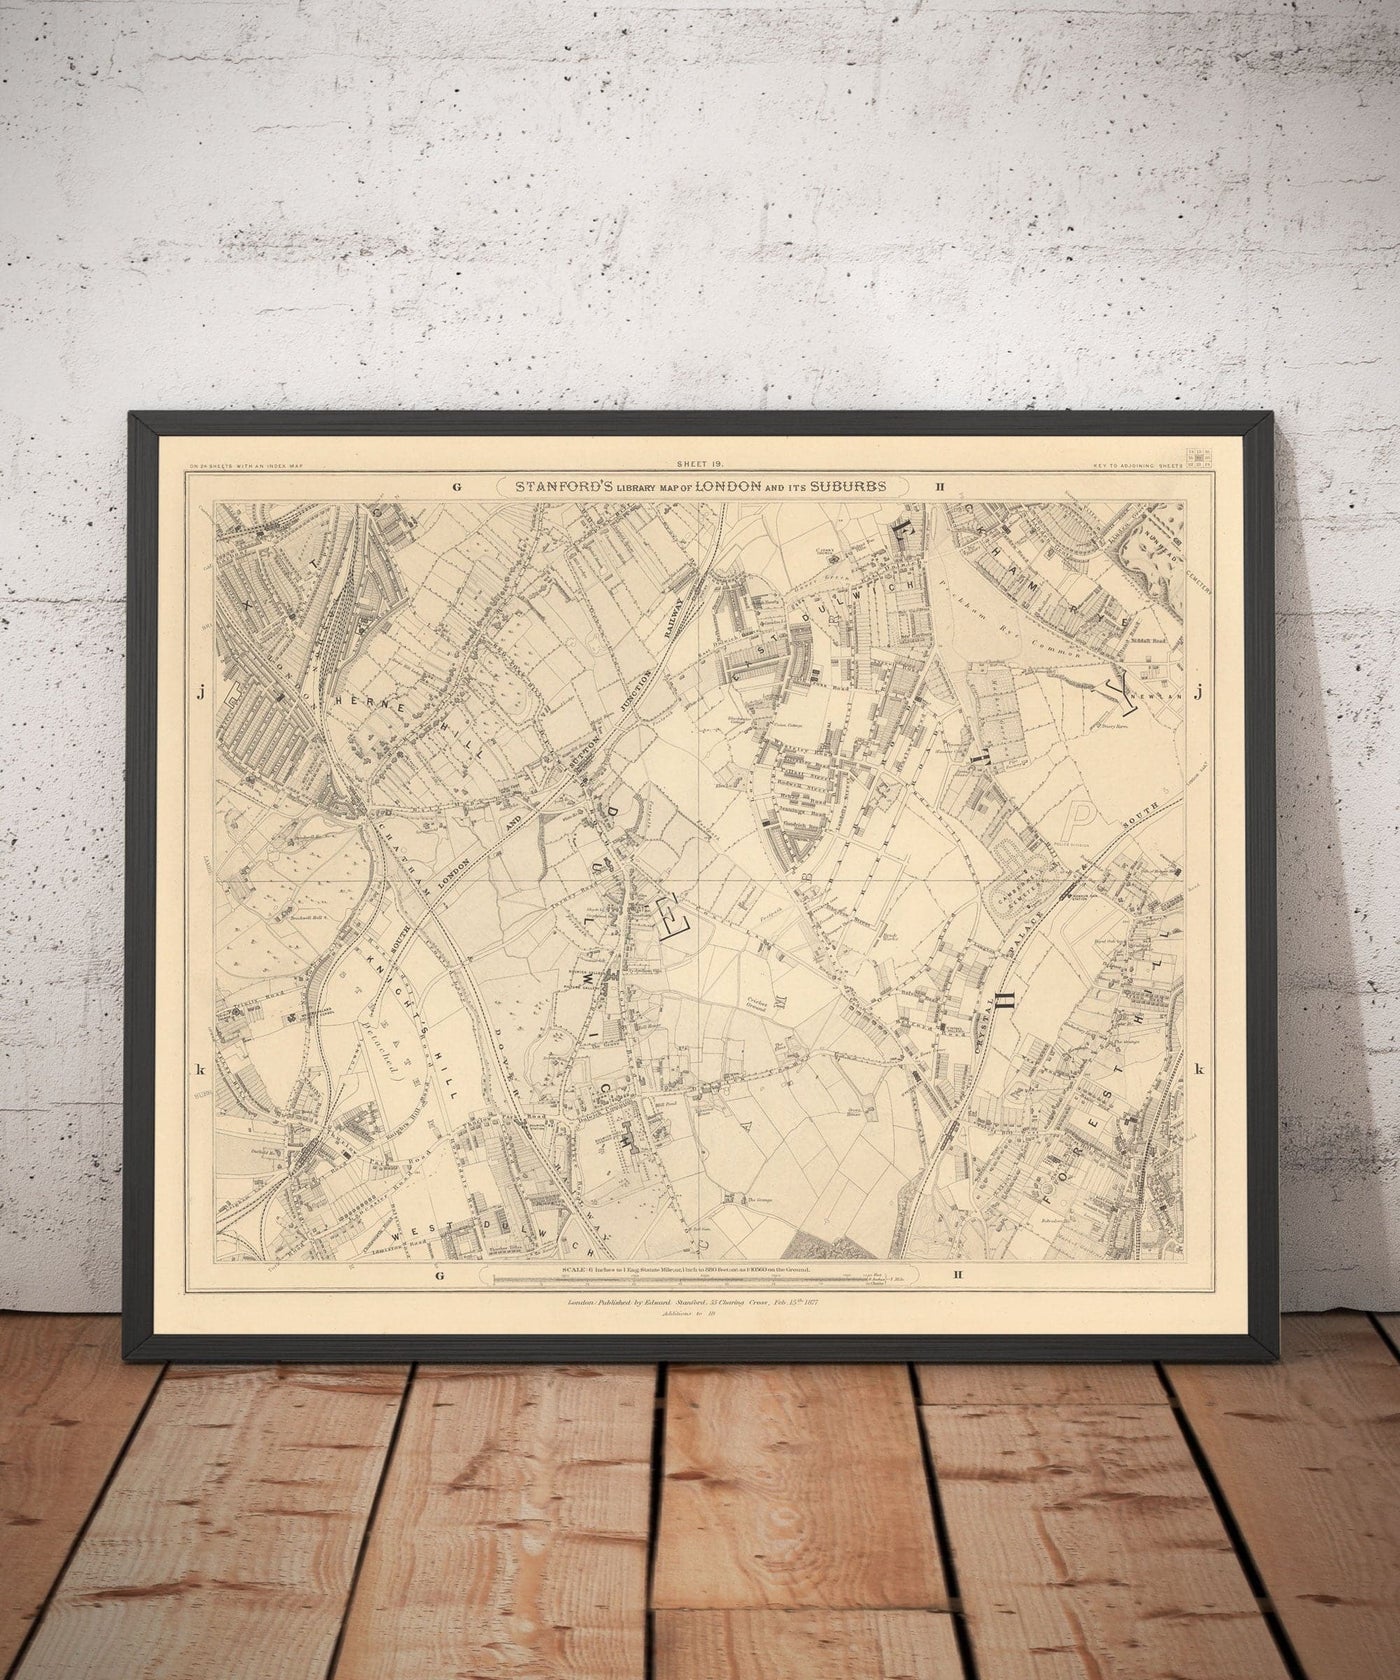 Ancienne carte de Sud Londres en 1862 par Edward Stanford - Dulwich, Peckham Rye, Herne Hill, Forest Hill - S24, SE22, SE21, SE23